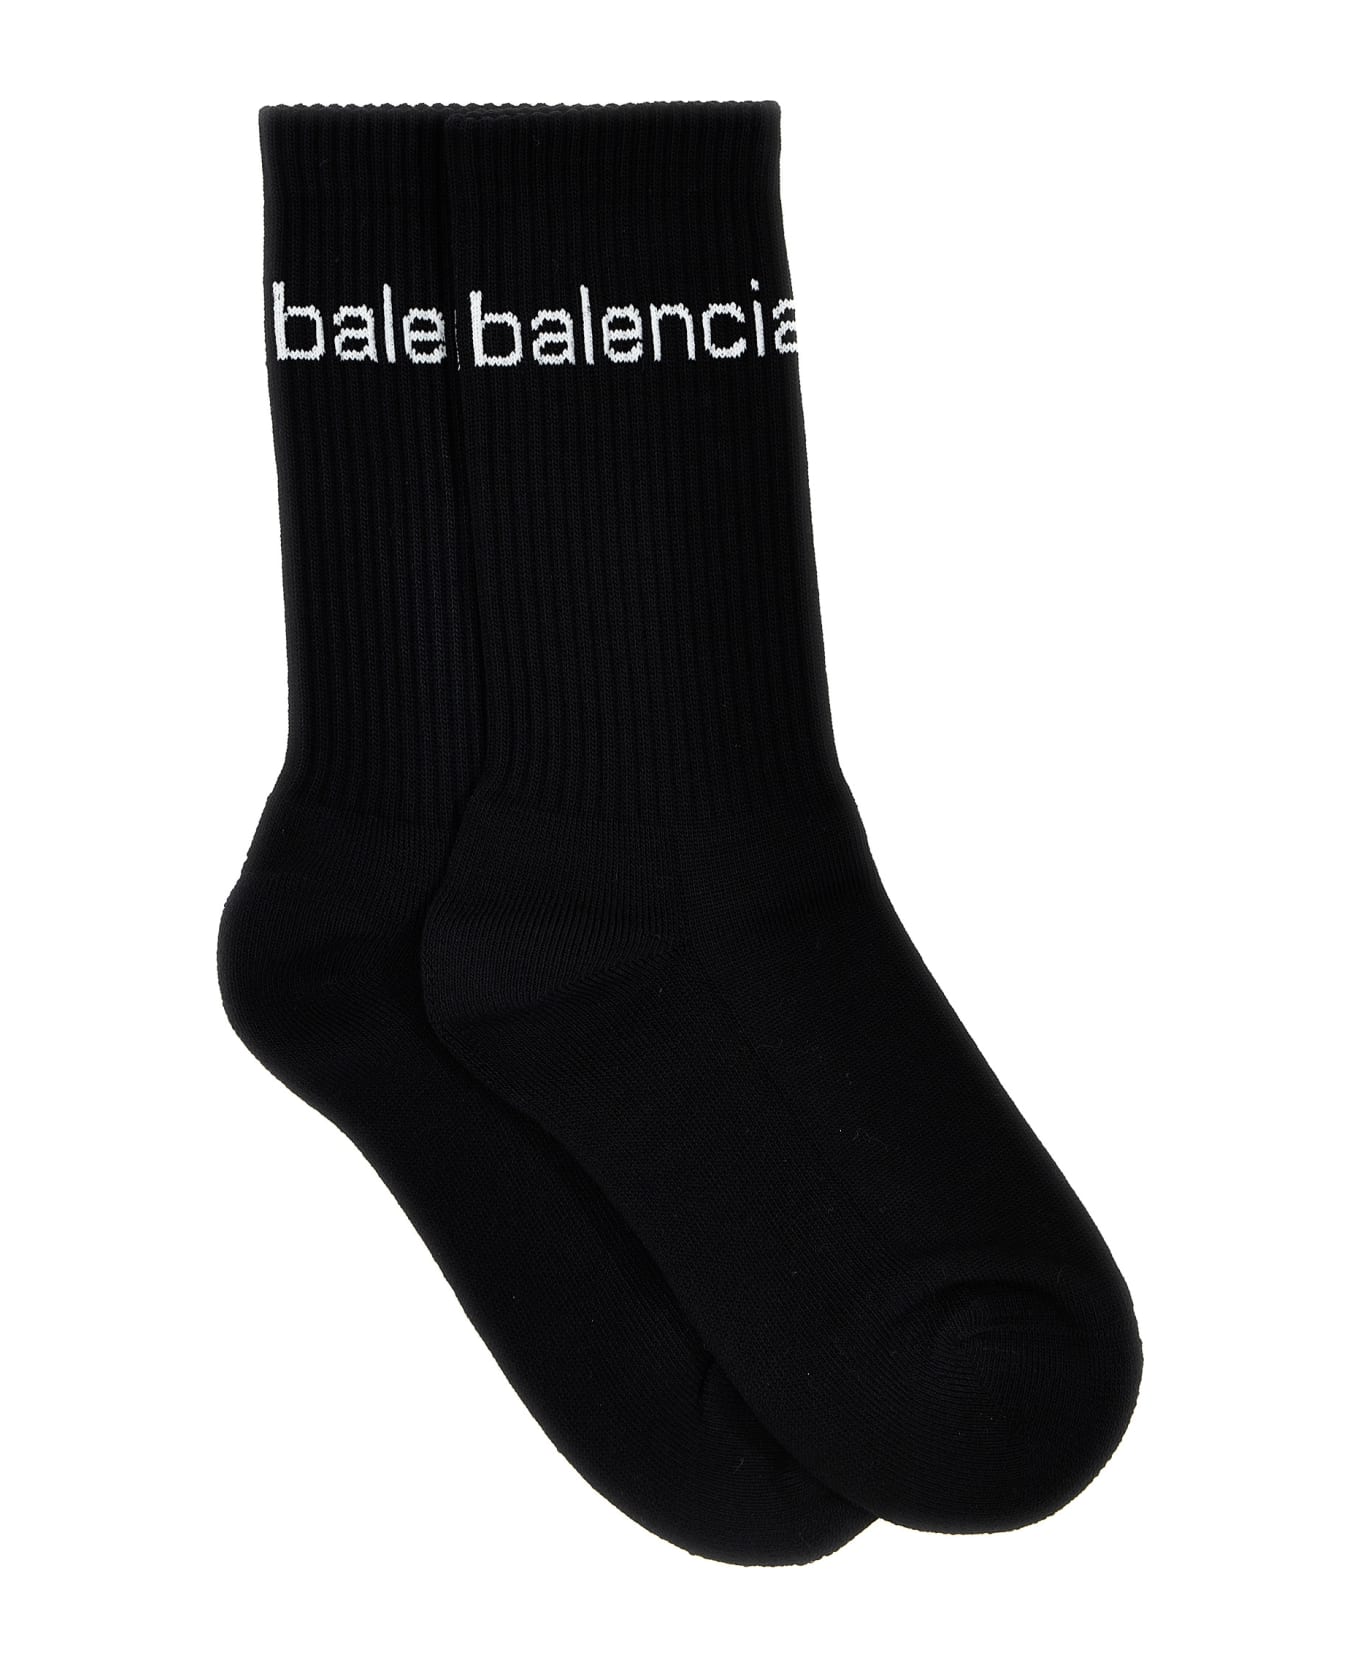 Balenciaga .com Socks - Black